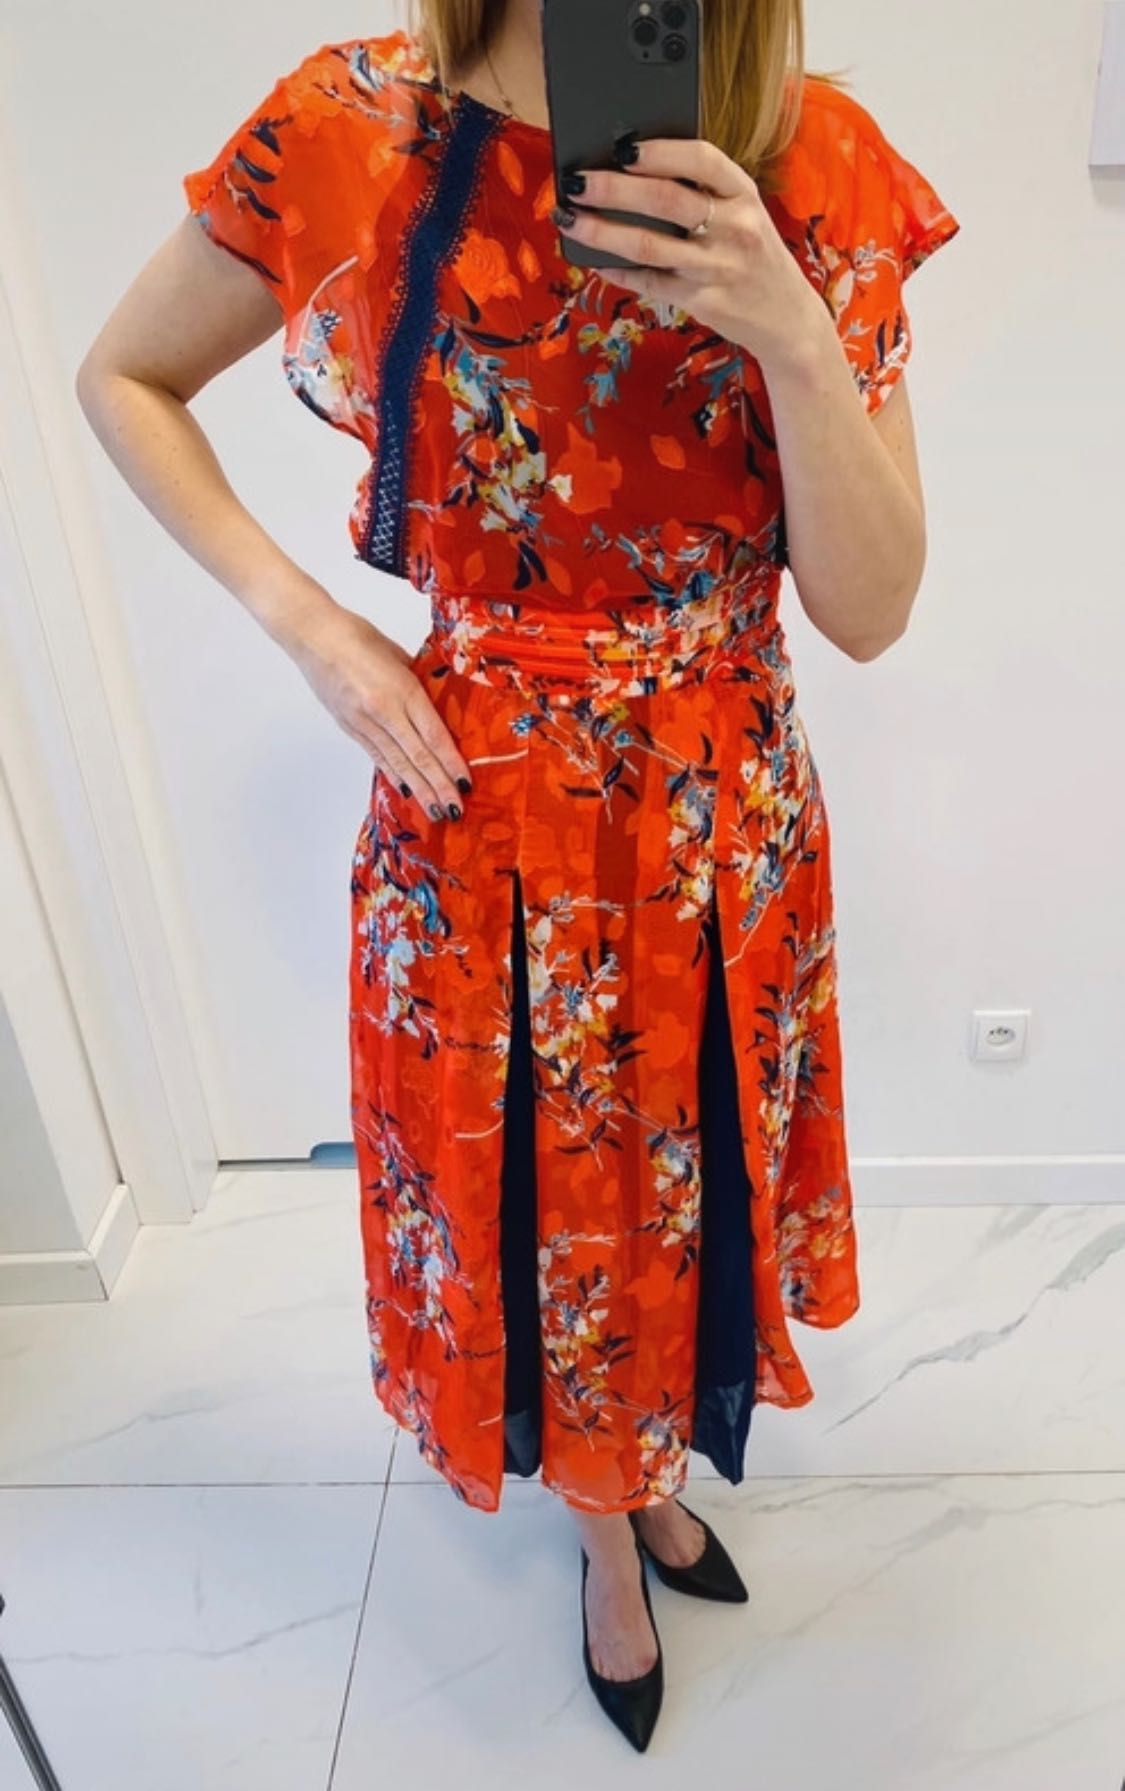 Koktajlowa sukienka Foxiedox XS/S pomarańczowa granat kwiaty midi maxi